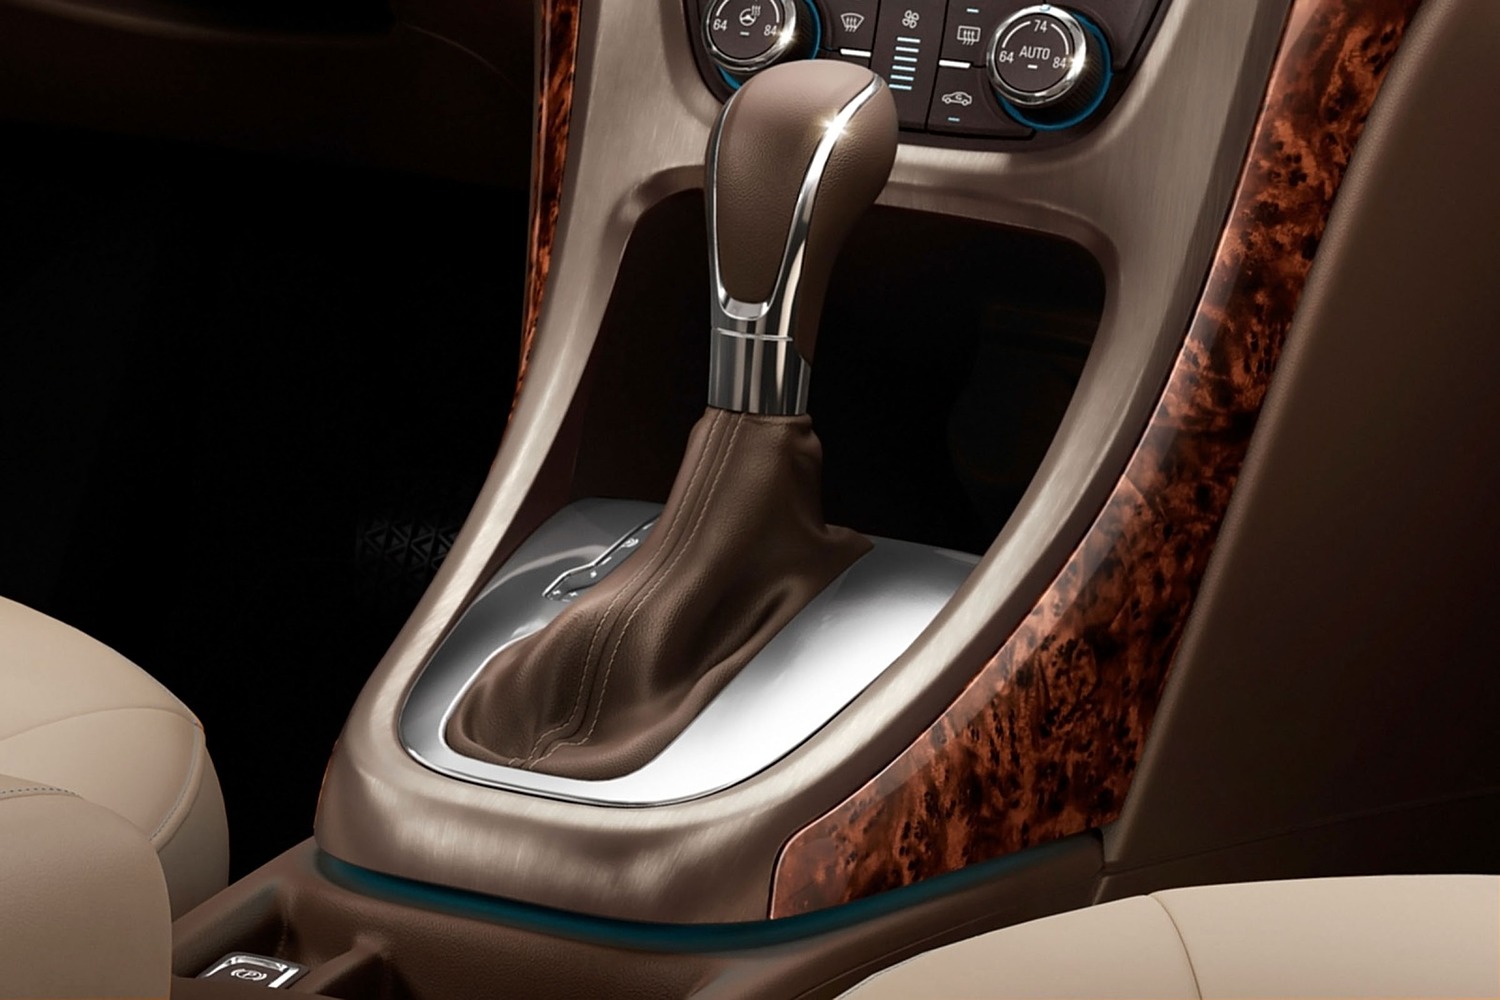 Buick Verano Leather Group Sedan Shifter (2015 model year shown)